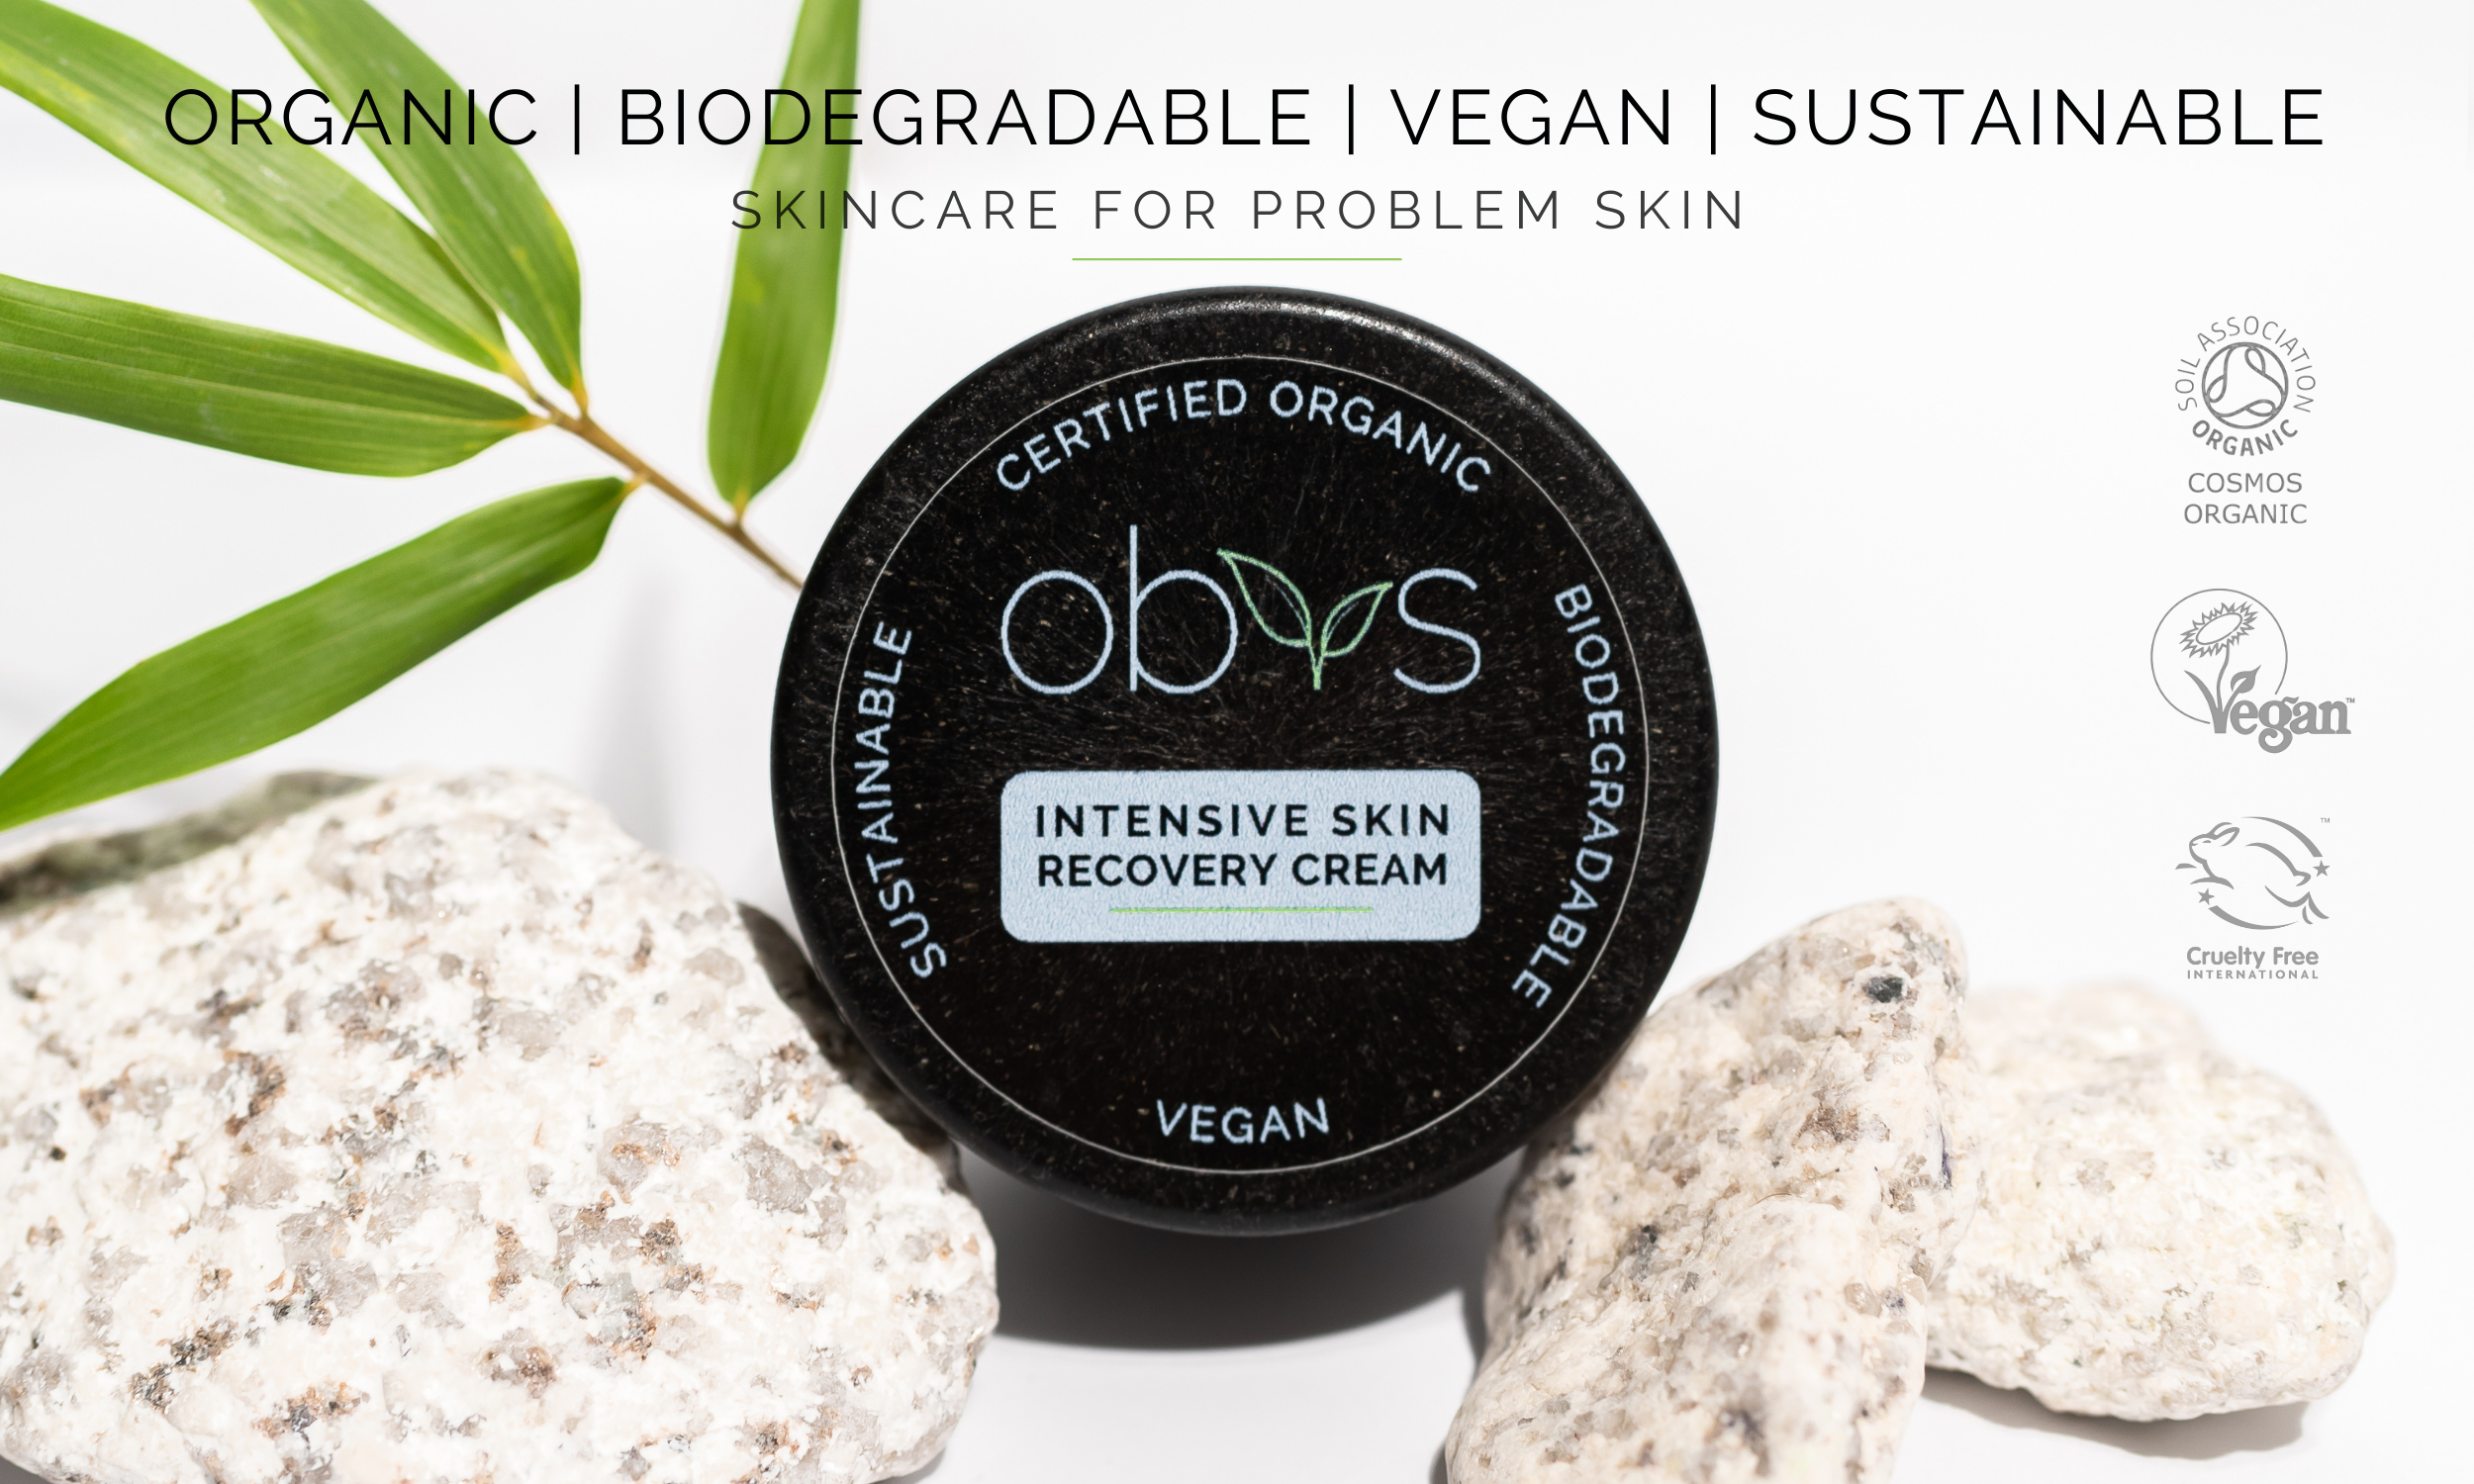 Organic vegan skincare for problem skin acne eczema